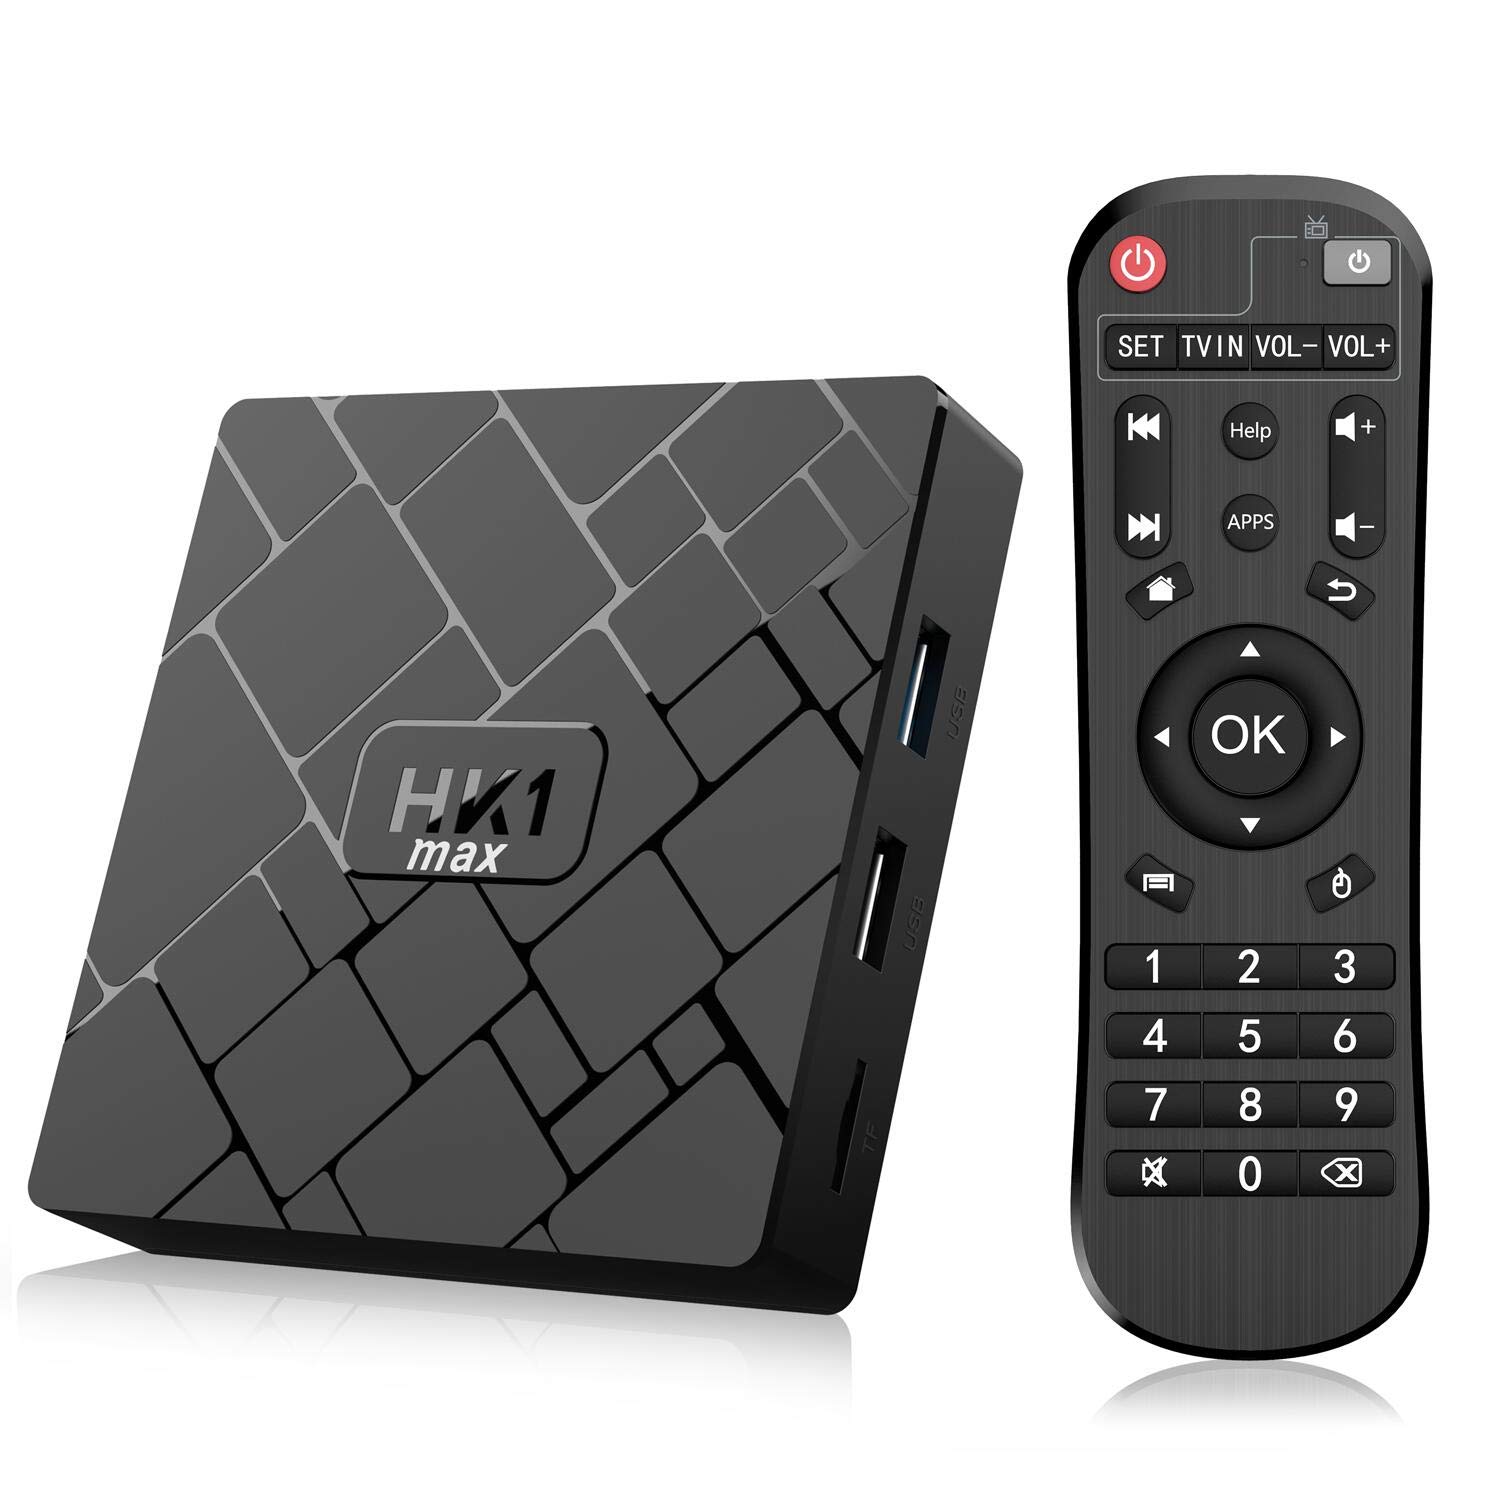 Wi-Fi-Dual 5G/2.4G Android 8.1 TV Box Android Box 4 GB RAM 64 GB ROM USB 3.0 BT 4.1 Livebox HK1 MAX RK3328 Quad Core 64 bit Smart TV Box Box TV UHD 4K TV 